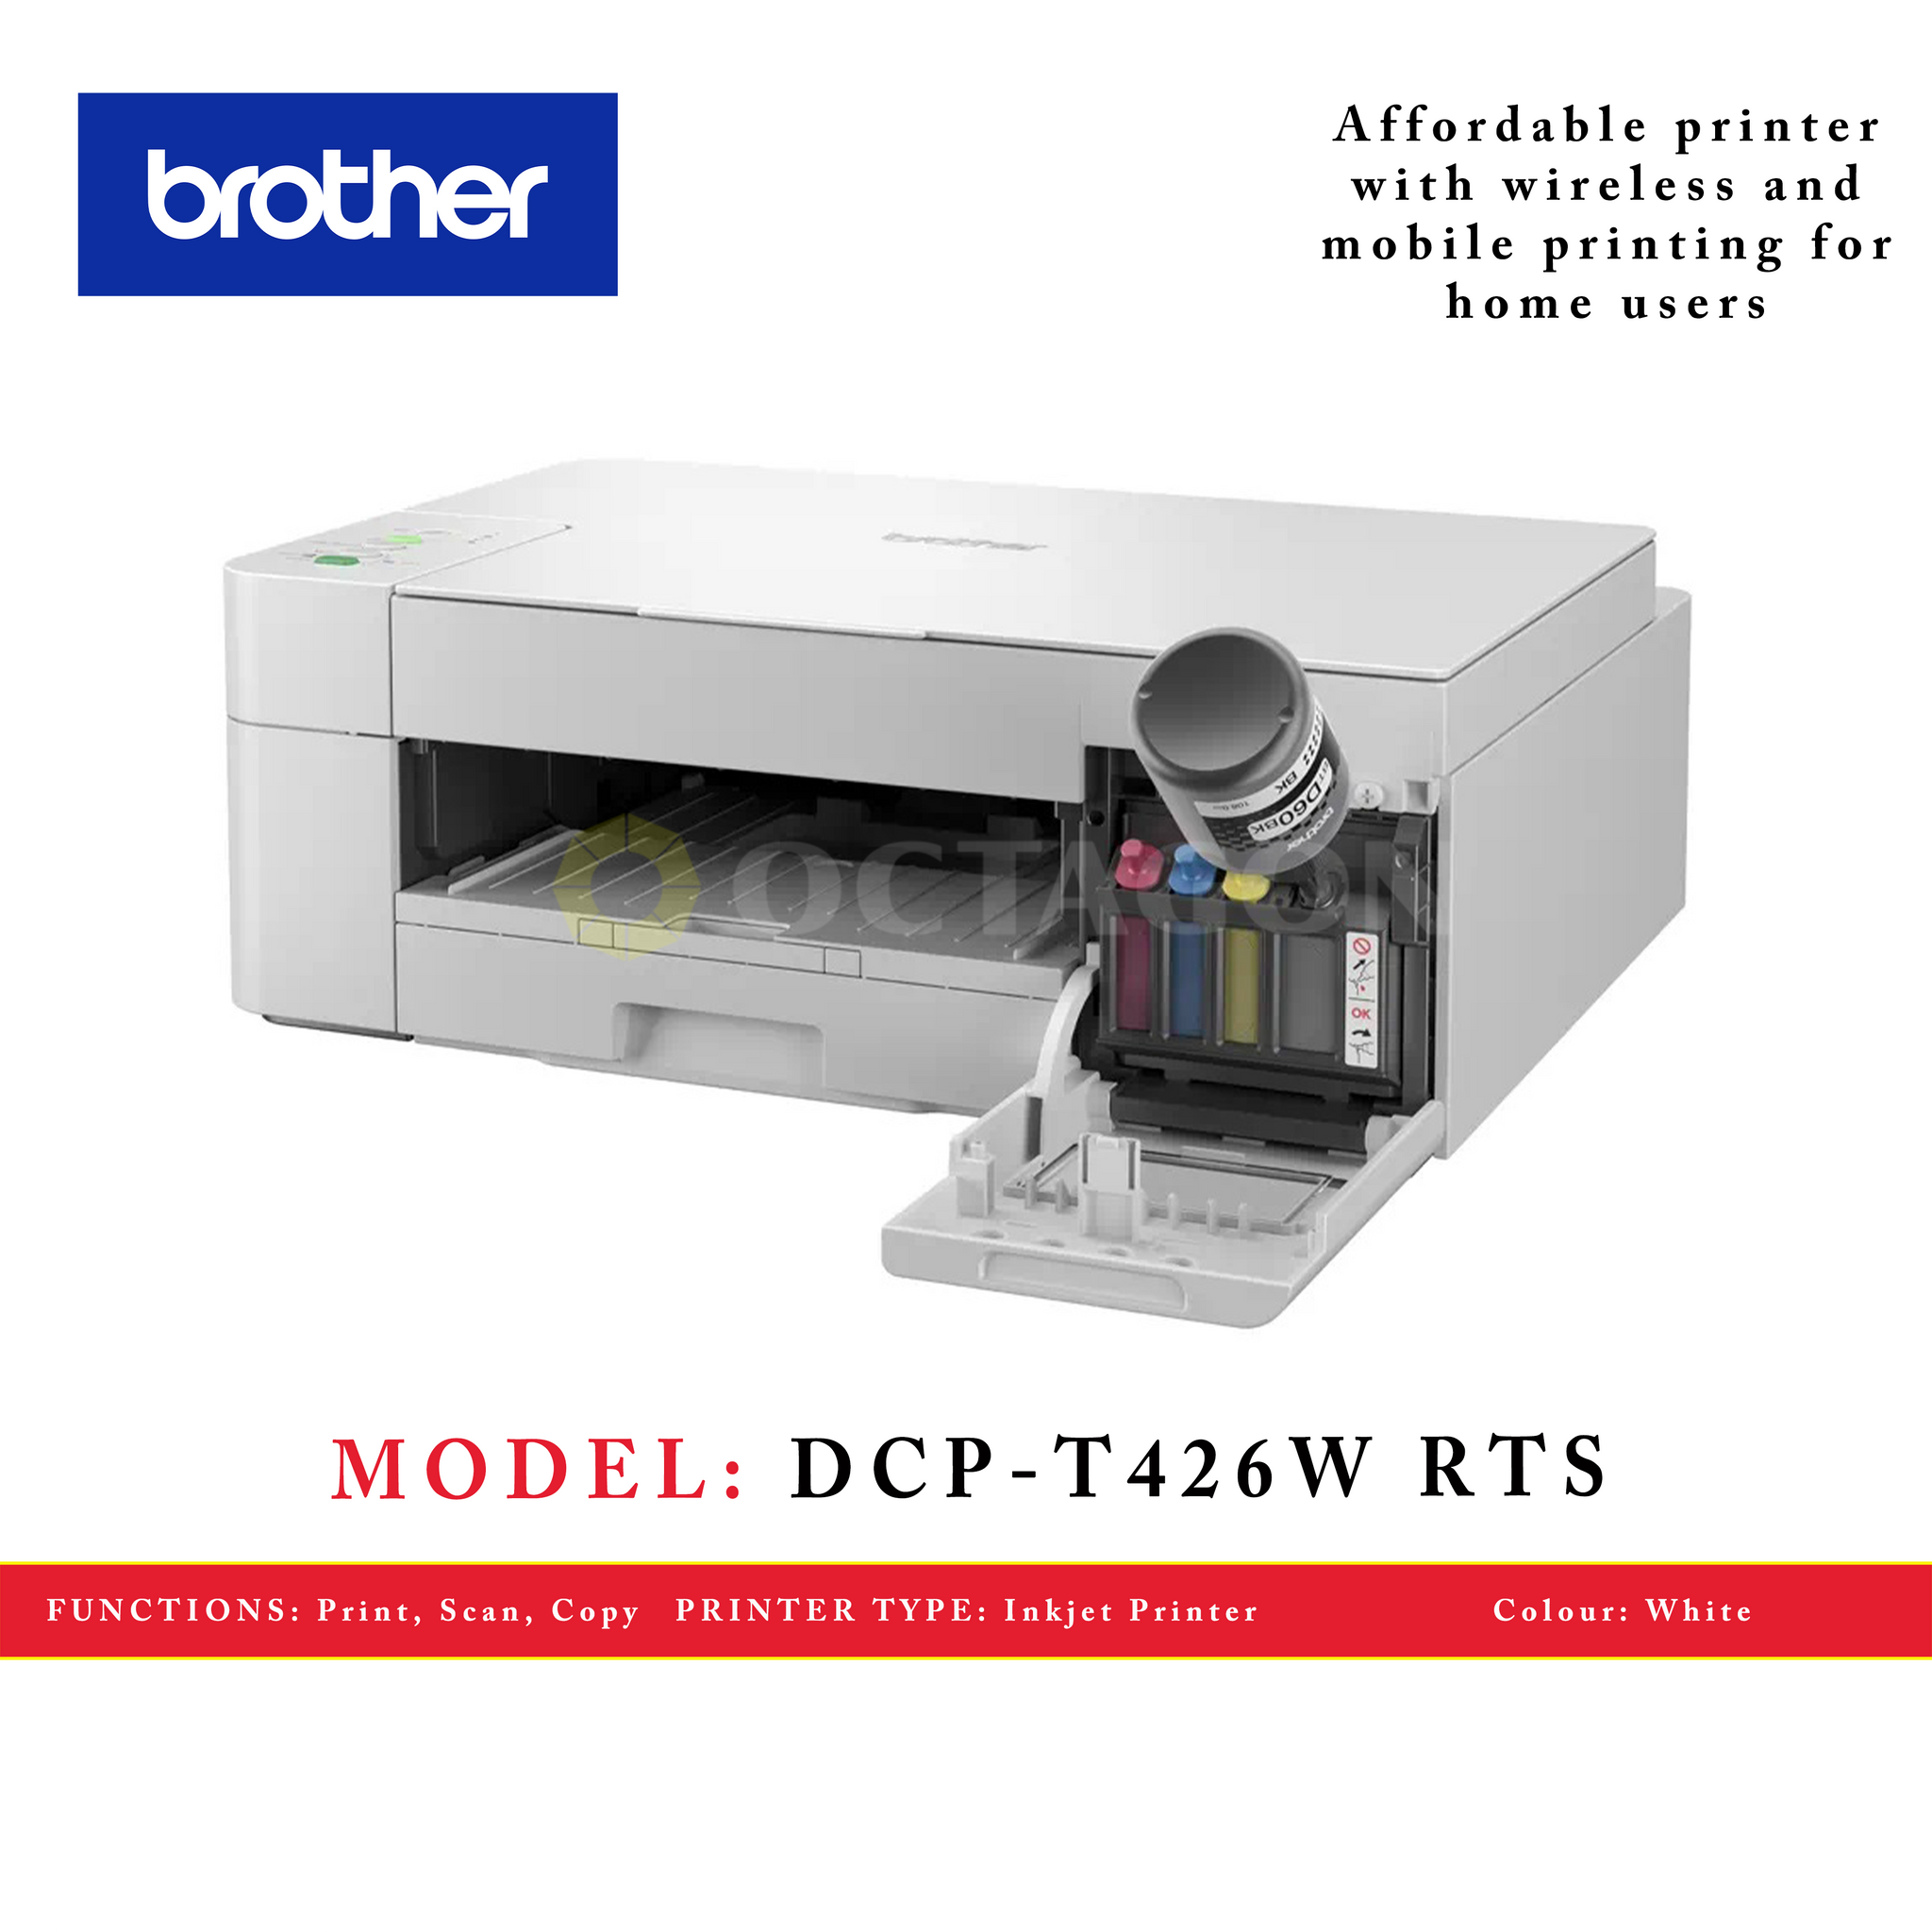 BROTHER DCP-T426W RTS PRINTER (BTD60/BT5000CMY)